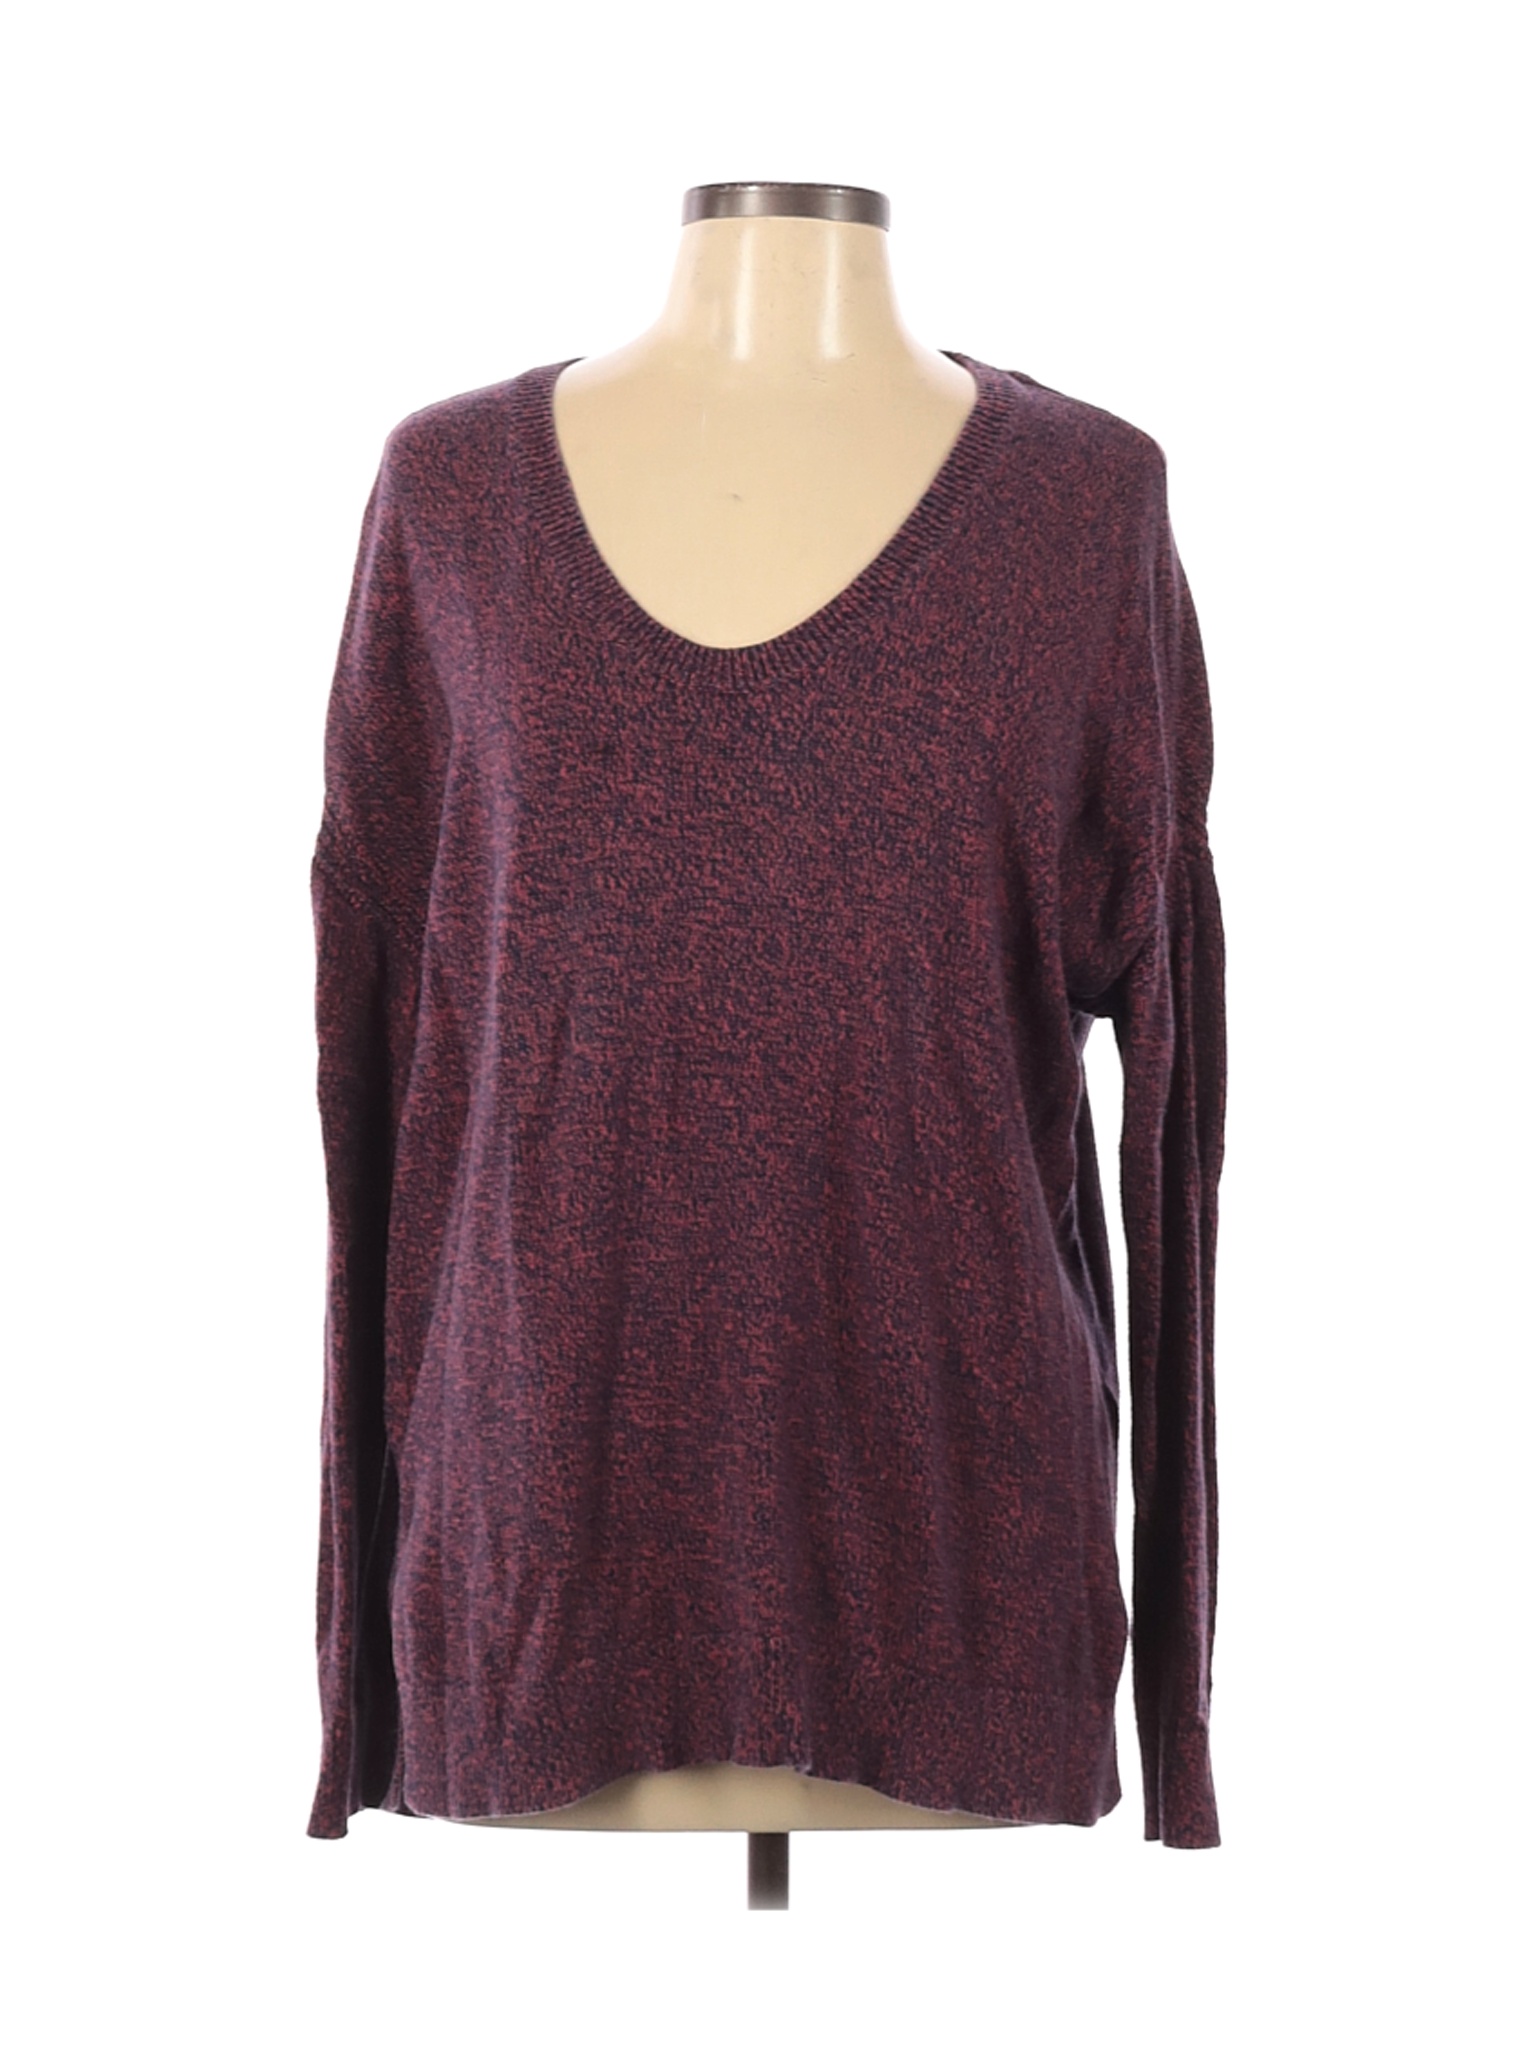 Gap Women Pink Pullover Sweater L | eBay